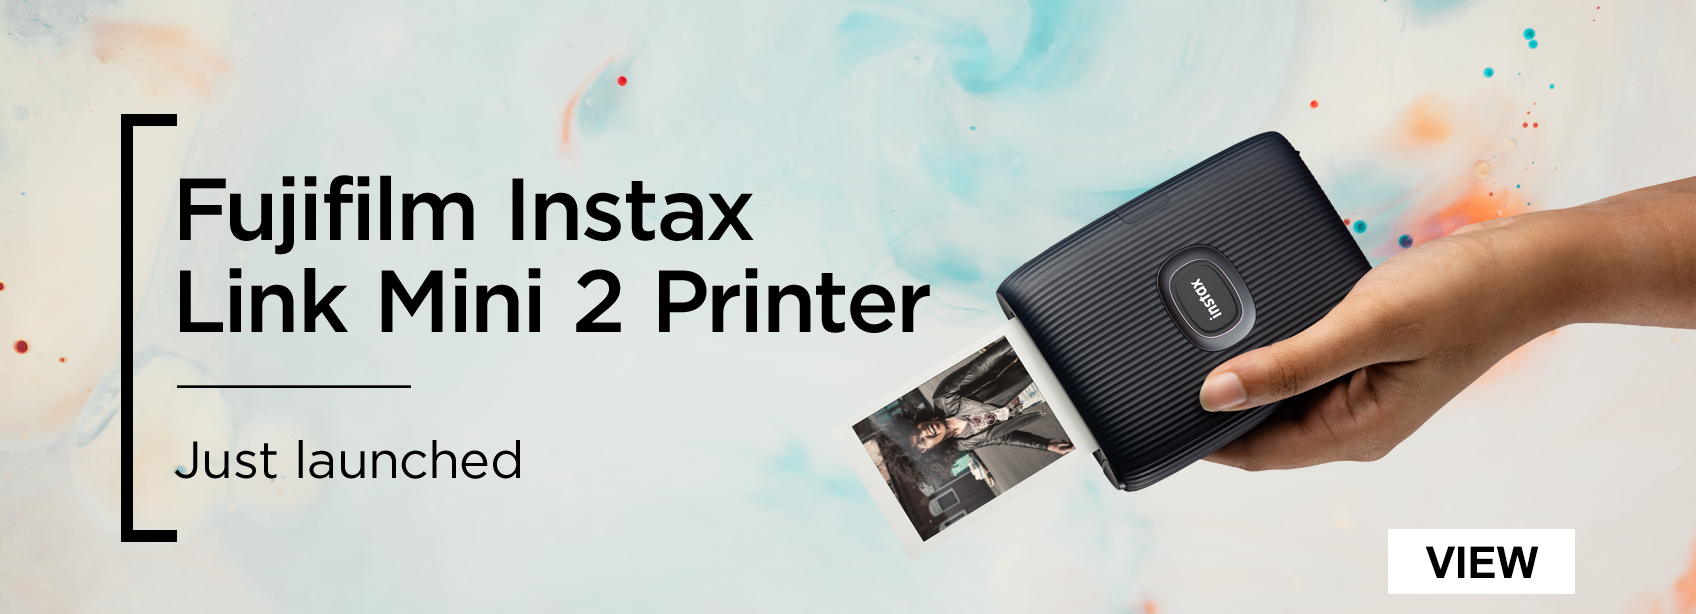 Fujifilm Instax Link Mini 2 Printer - Just launched